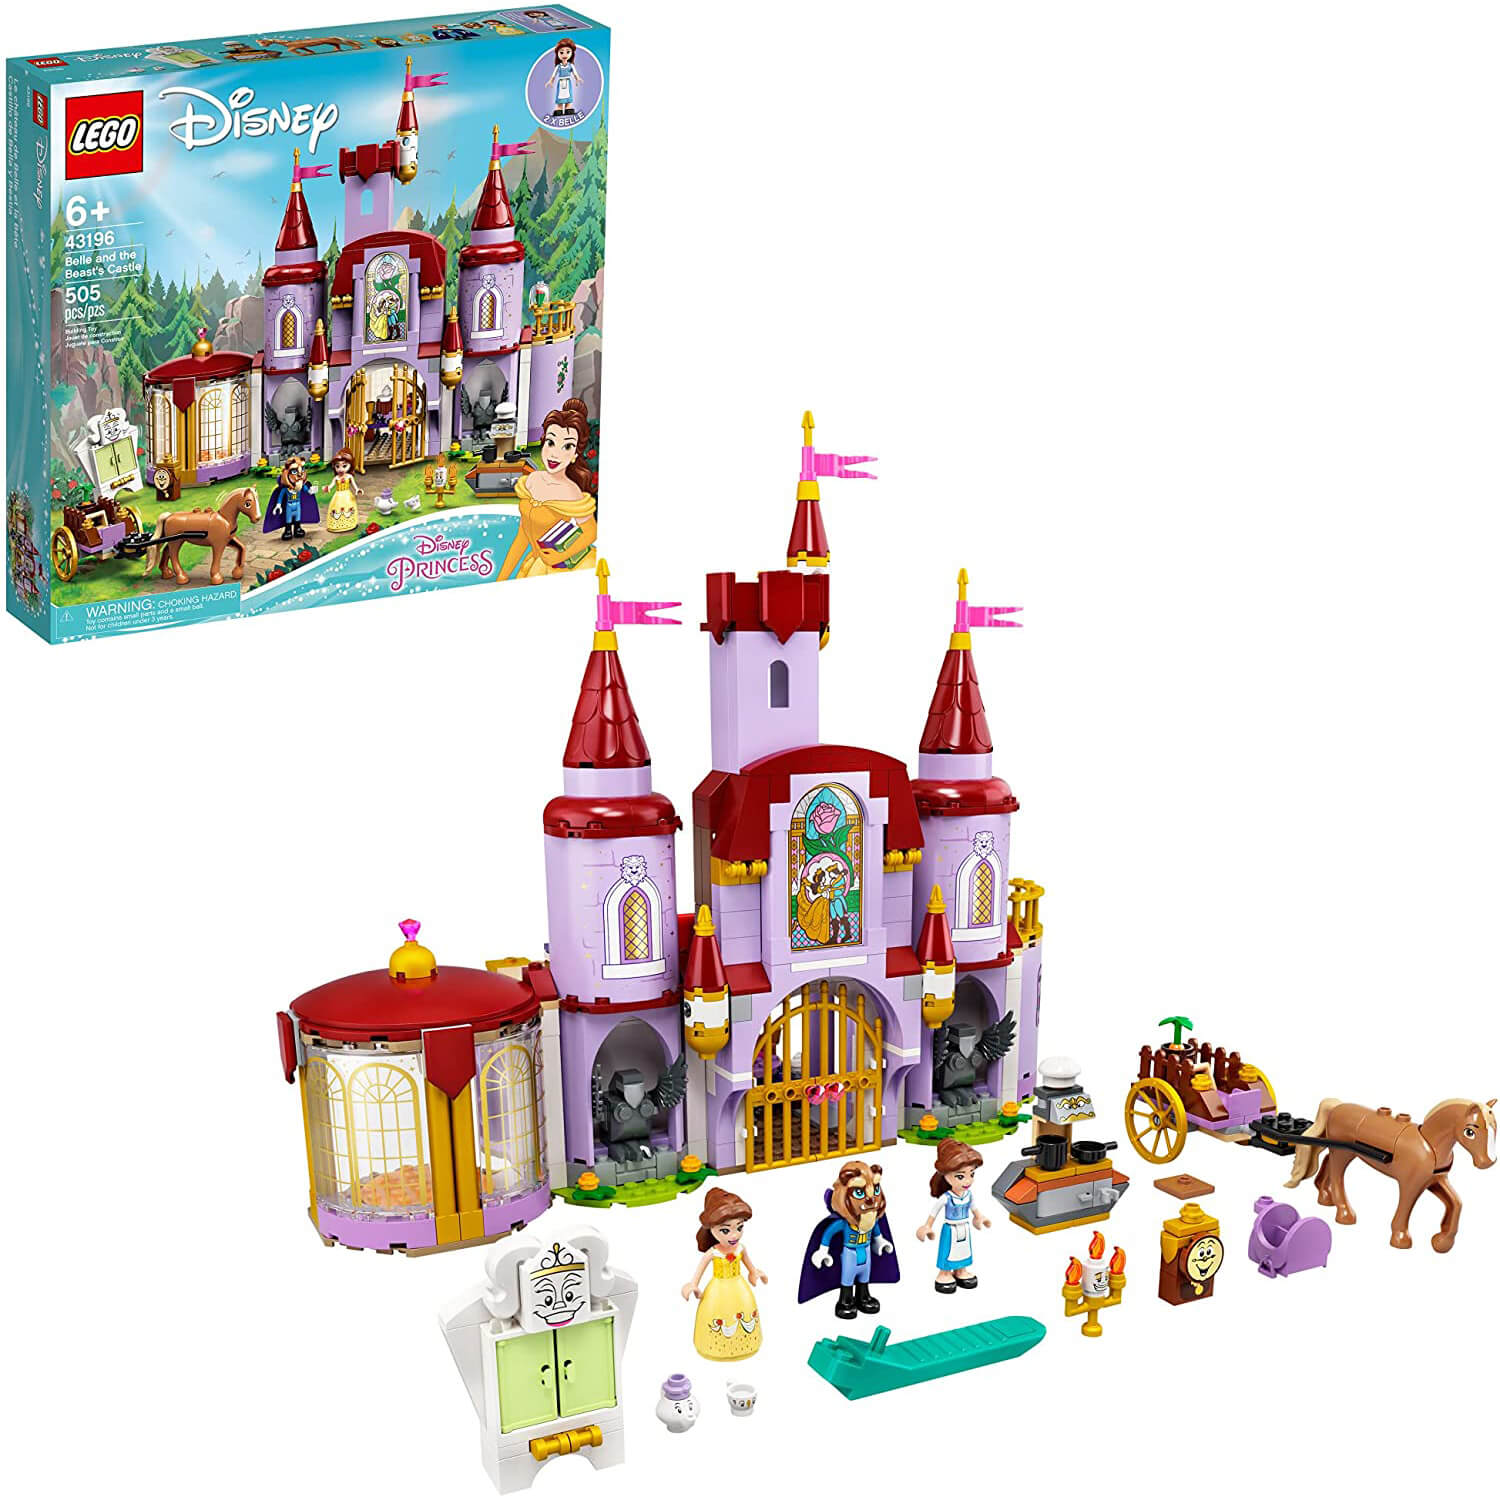 LEGO Disney Princess Belle and the Beast's Castle 505 Piece Building Set (43196)